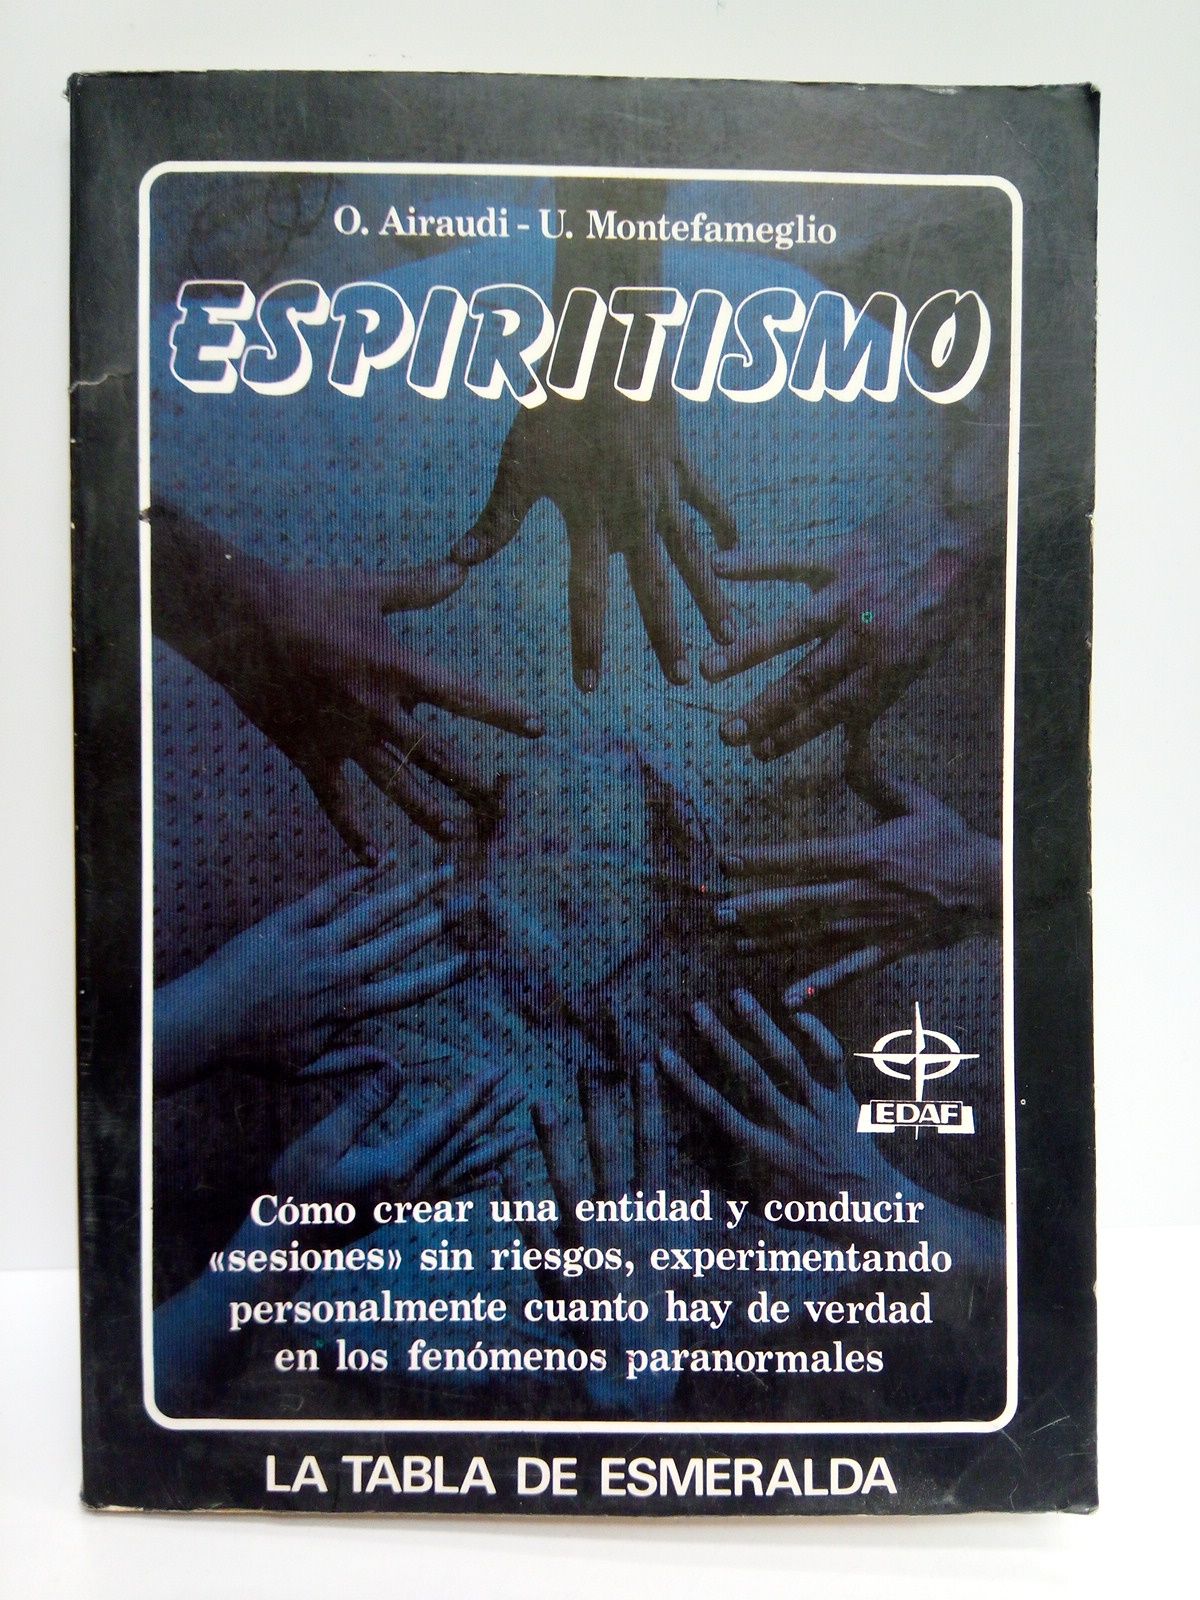 AIRAUDI, Oberto y Umberto Montefameglio - Espiritismo /  Traduc. de M. Luz Gonzlez Snchez